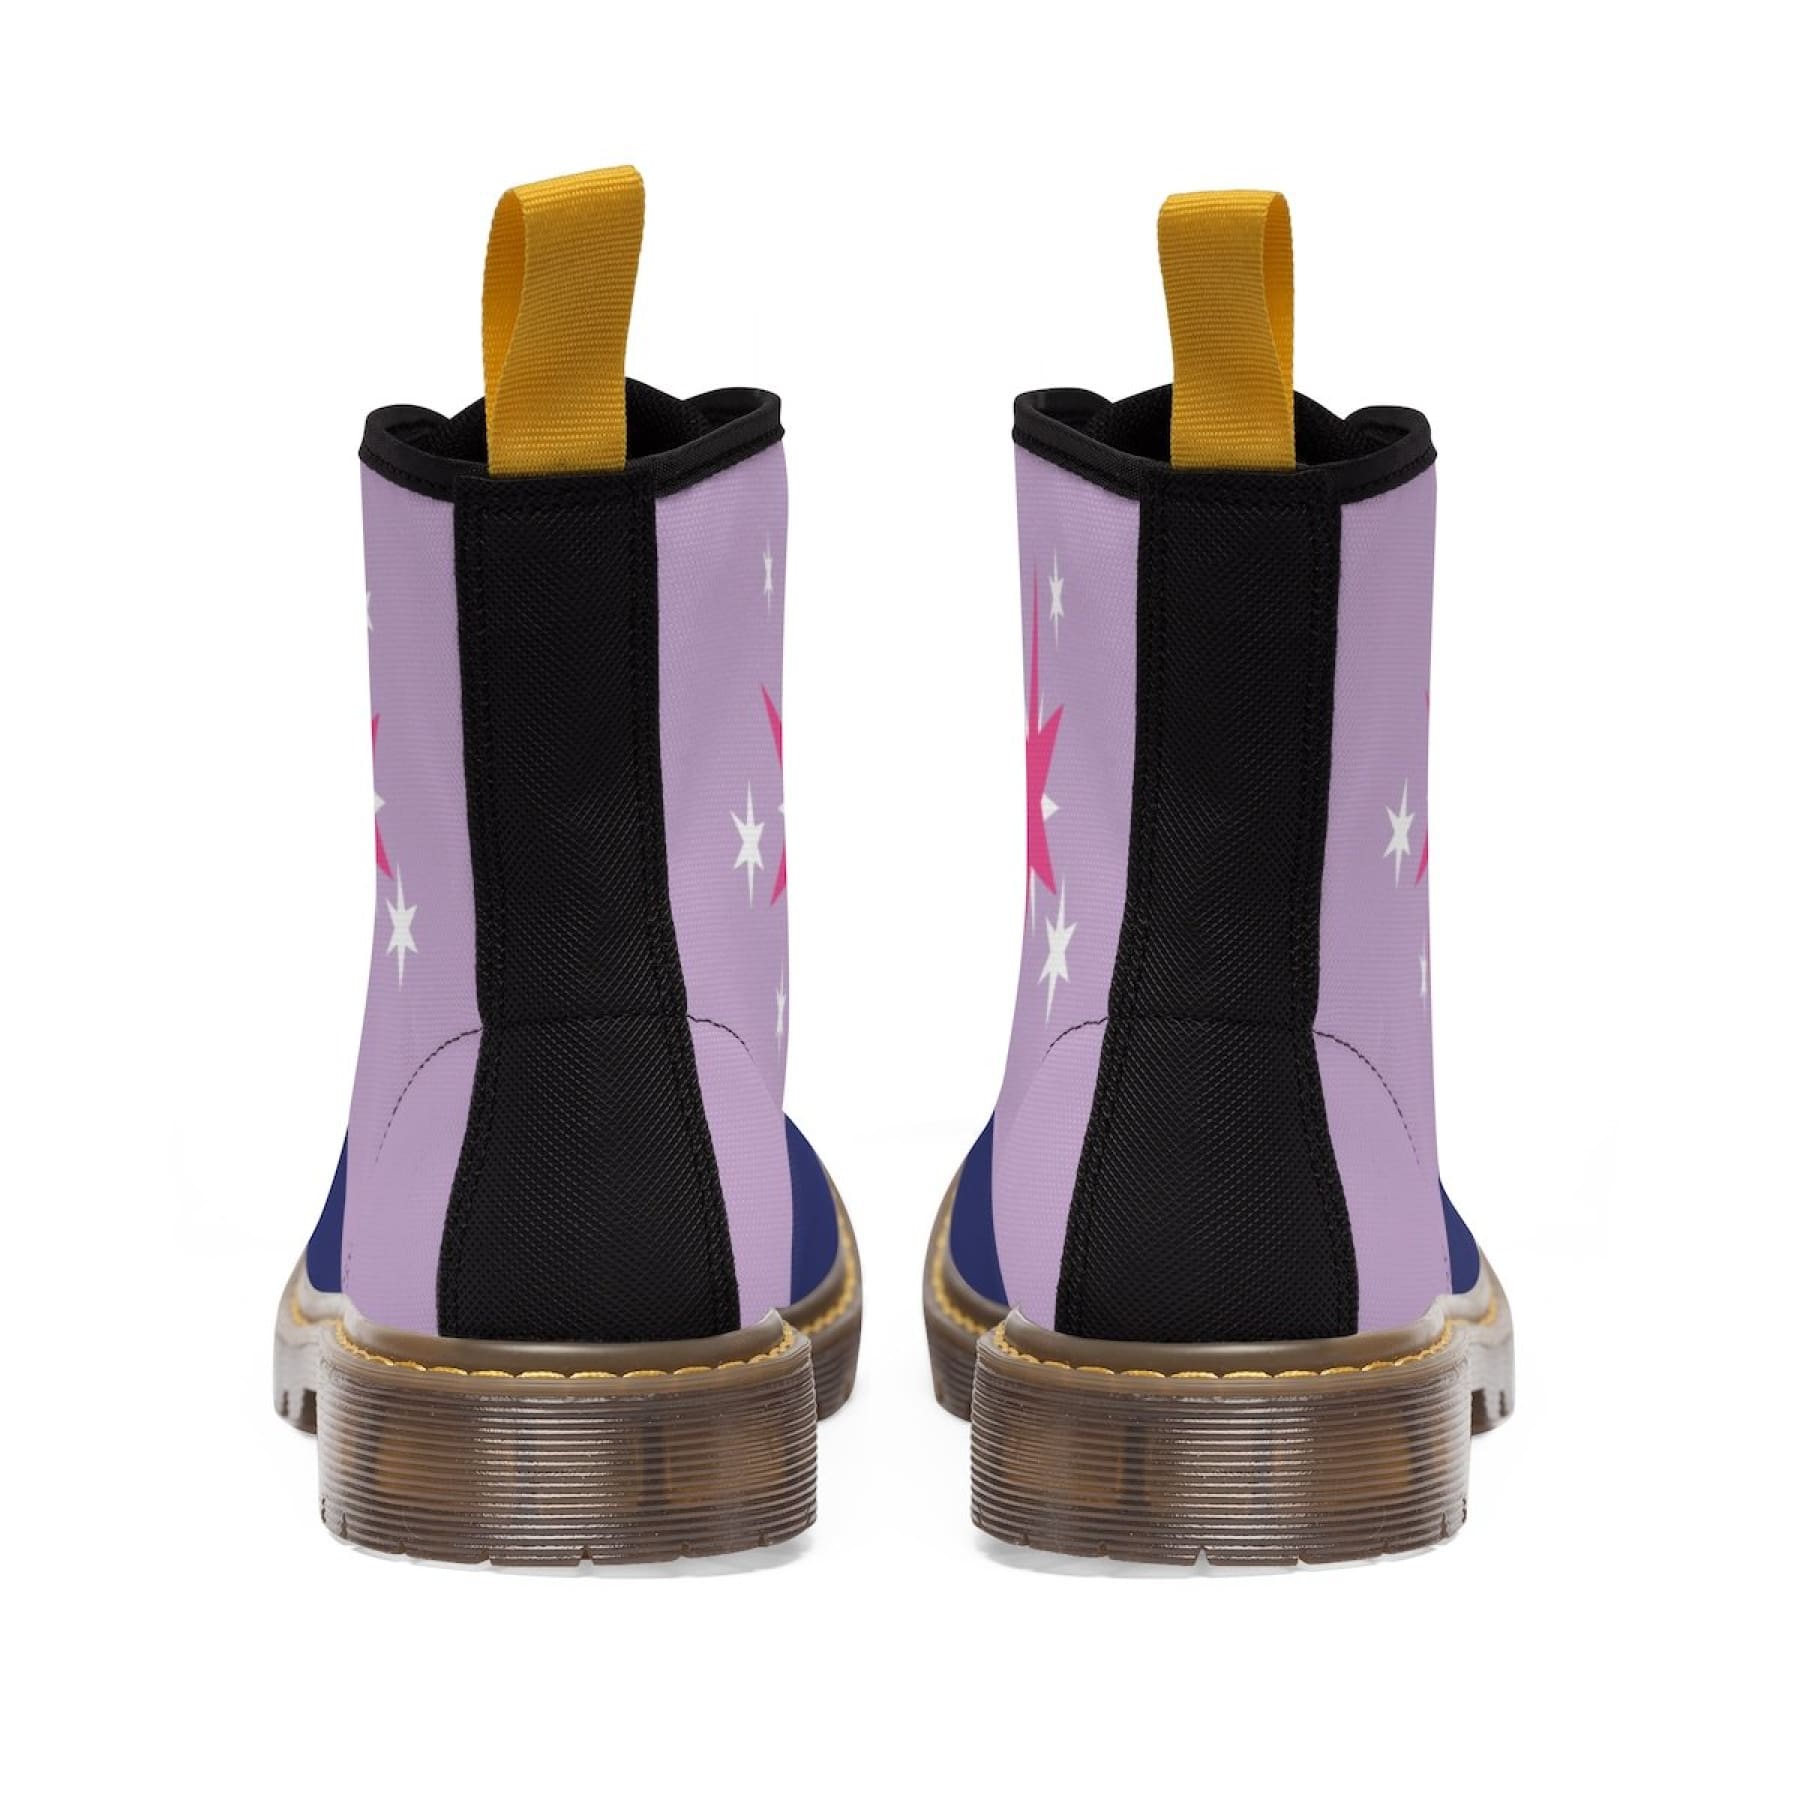 Twilight Sparkle Pattern Women's Boots